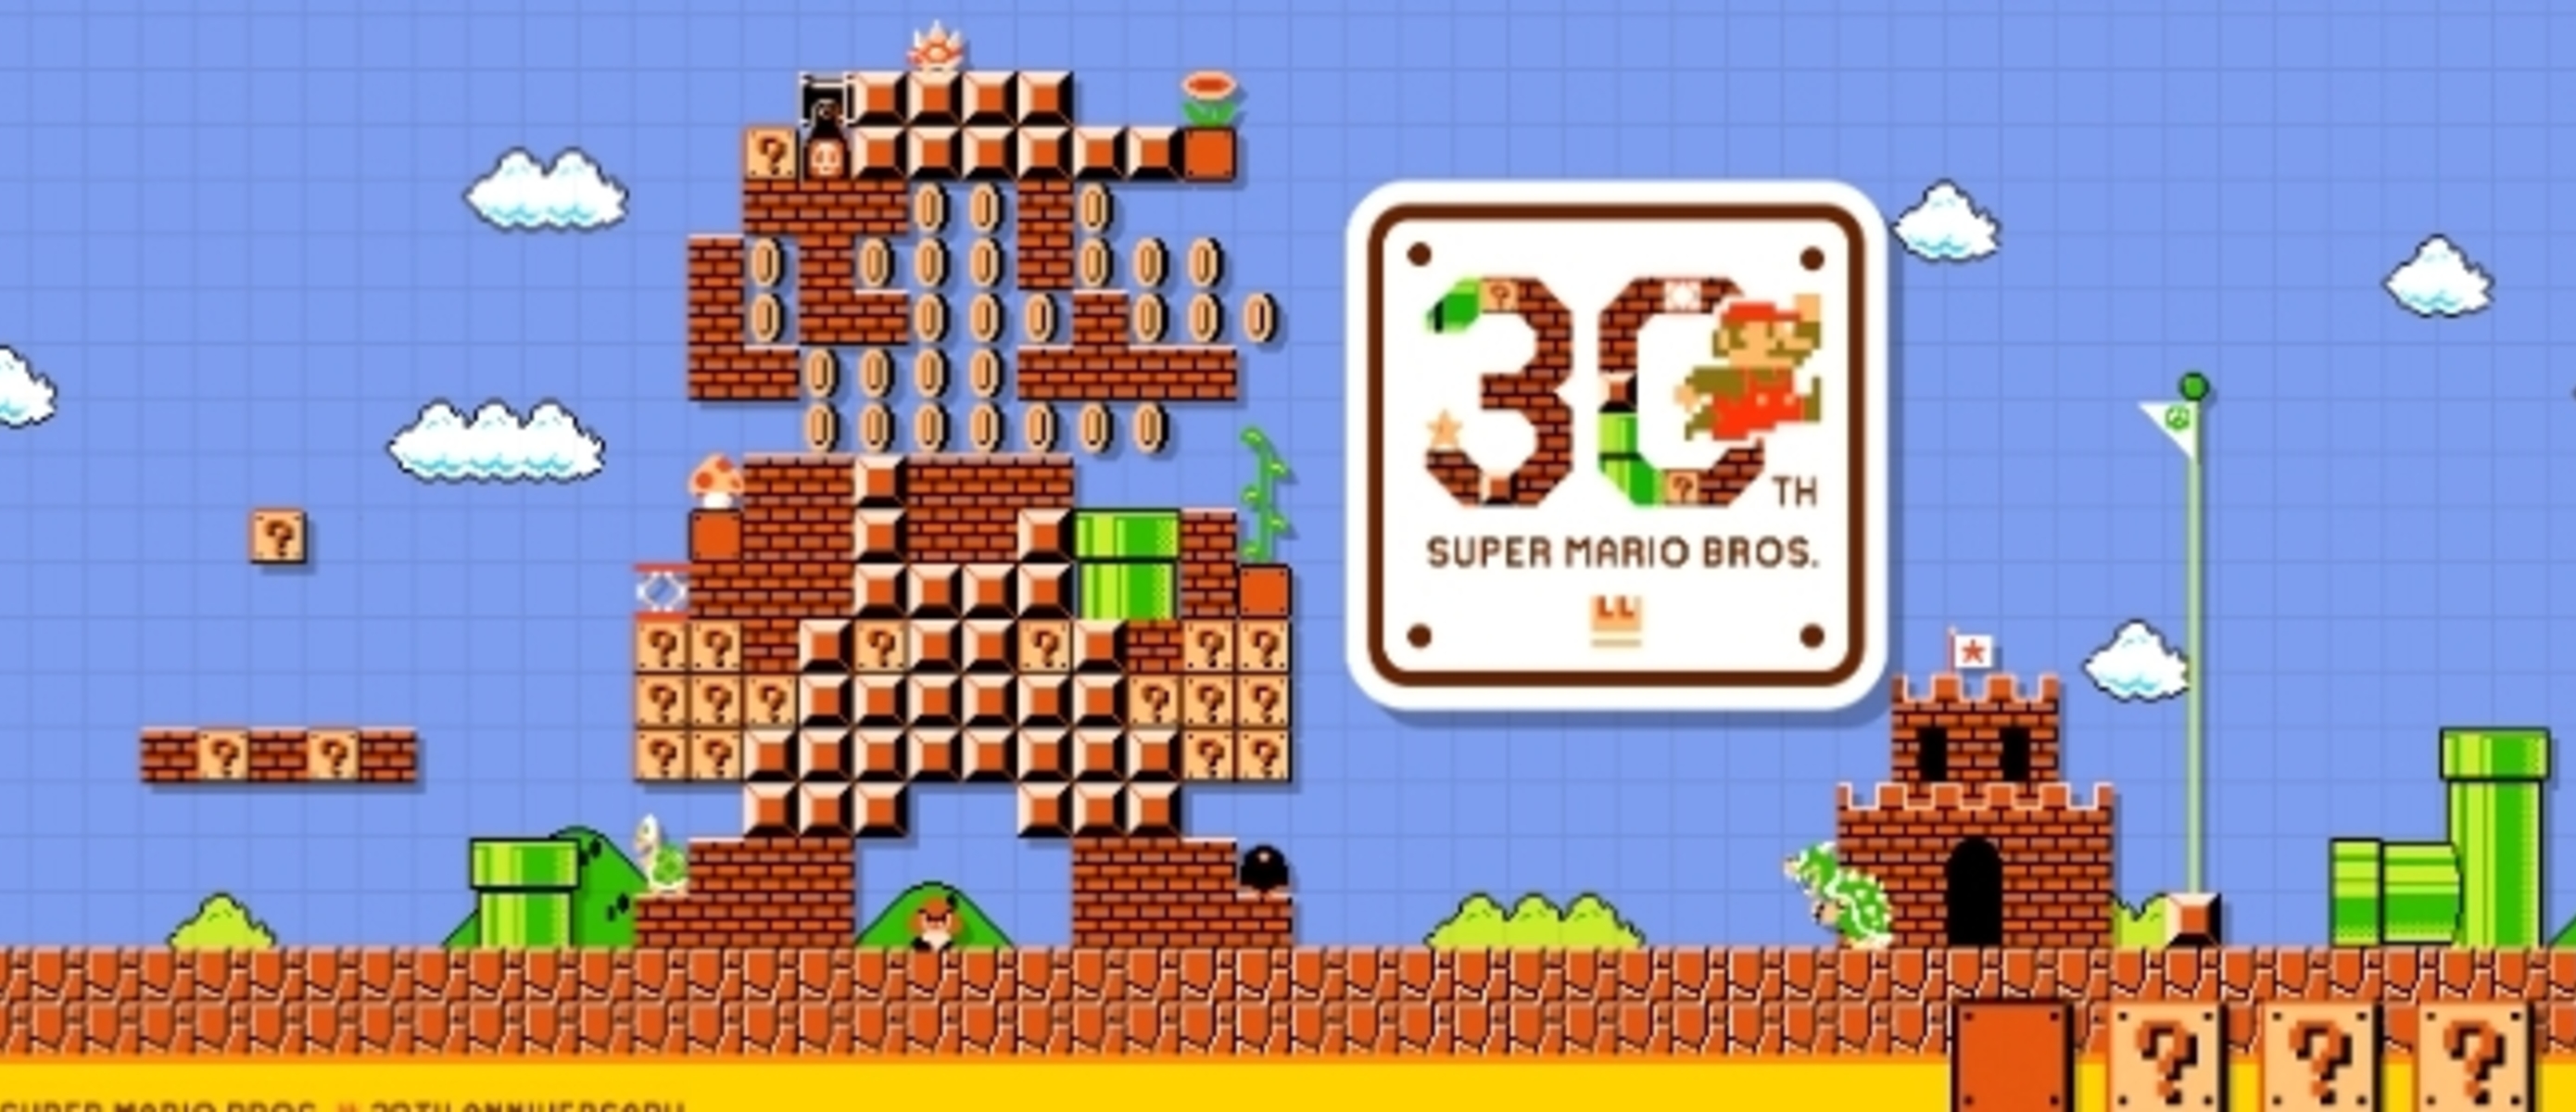 Super mario bros game. Super Mario Bros 1985 Nintendo. Игры super Mario Bros Нинтендо. Супер Марио БРОС Nintendo. Эволюция Марио.